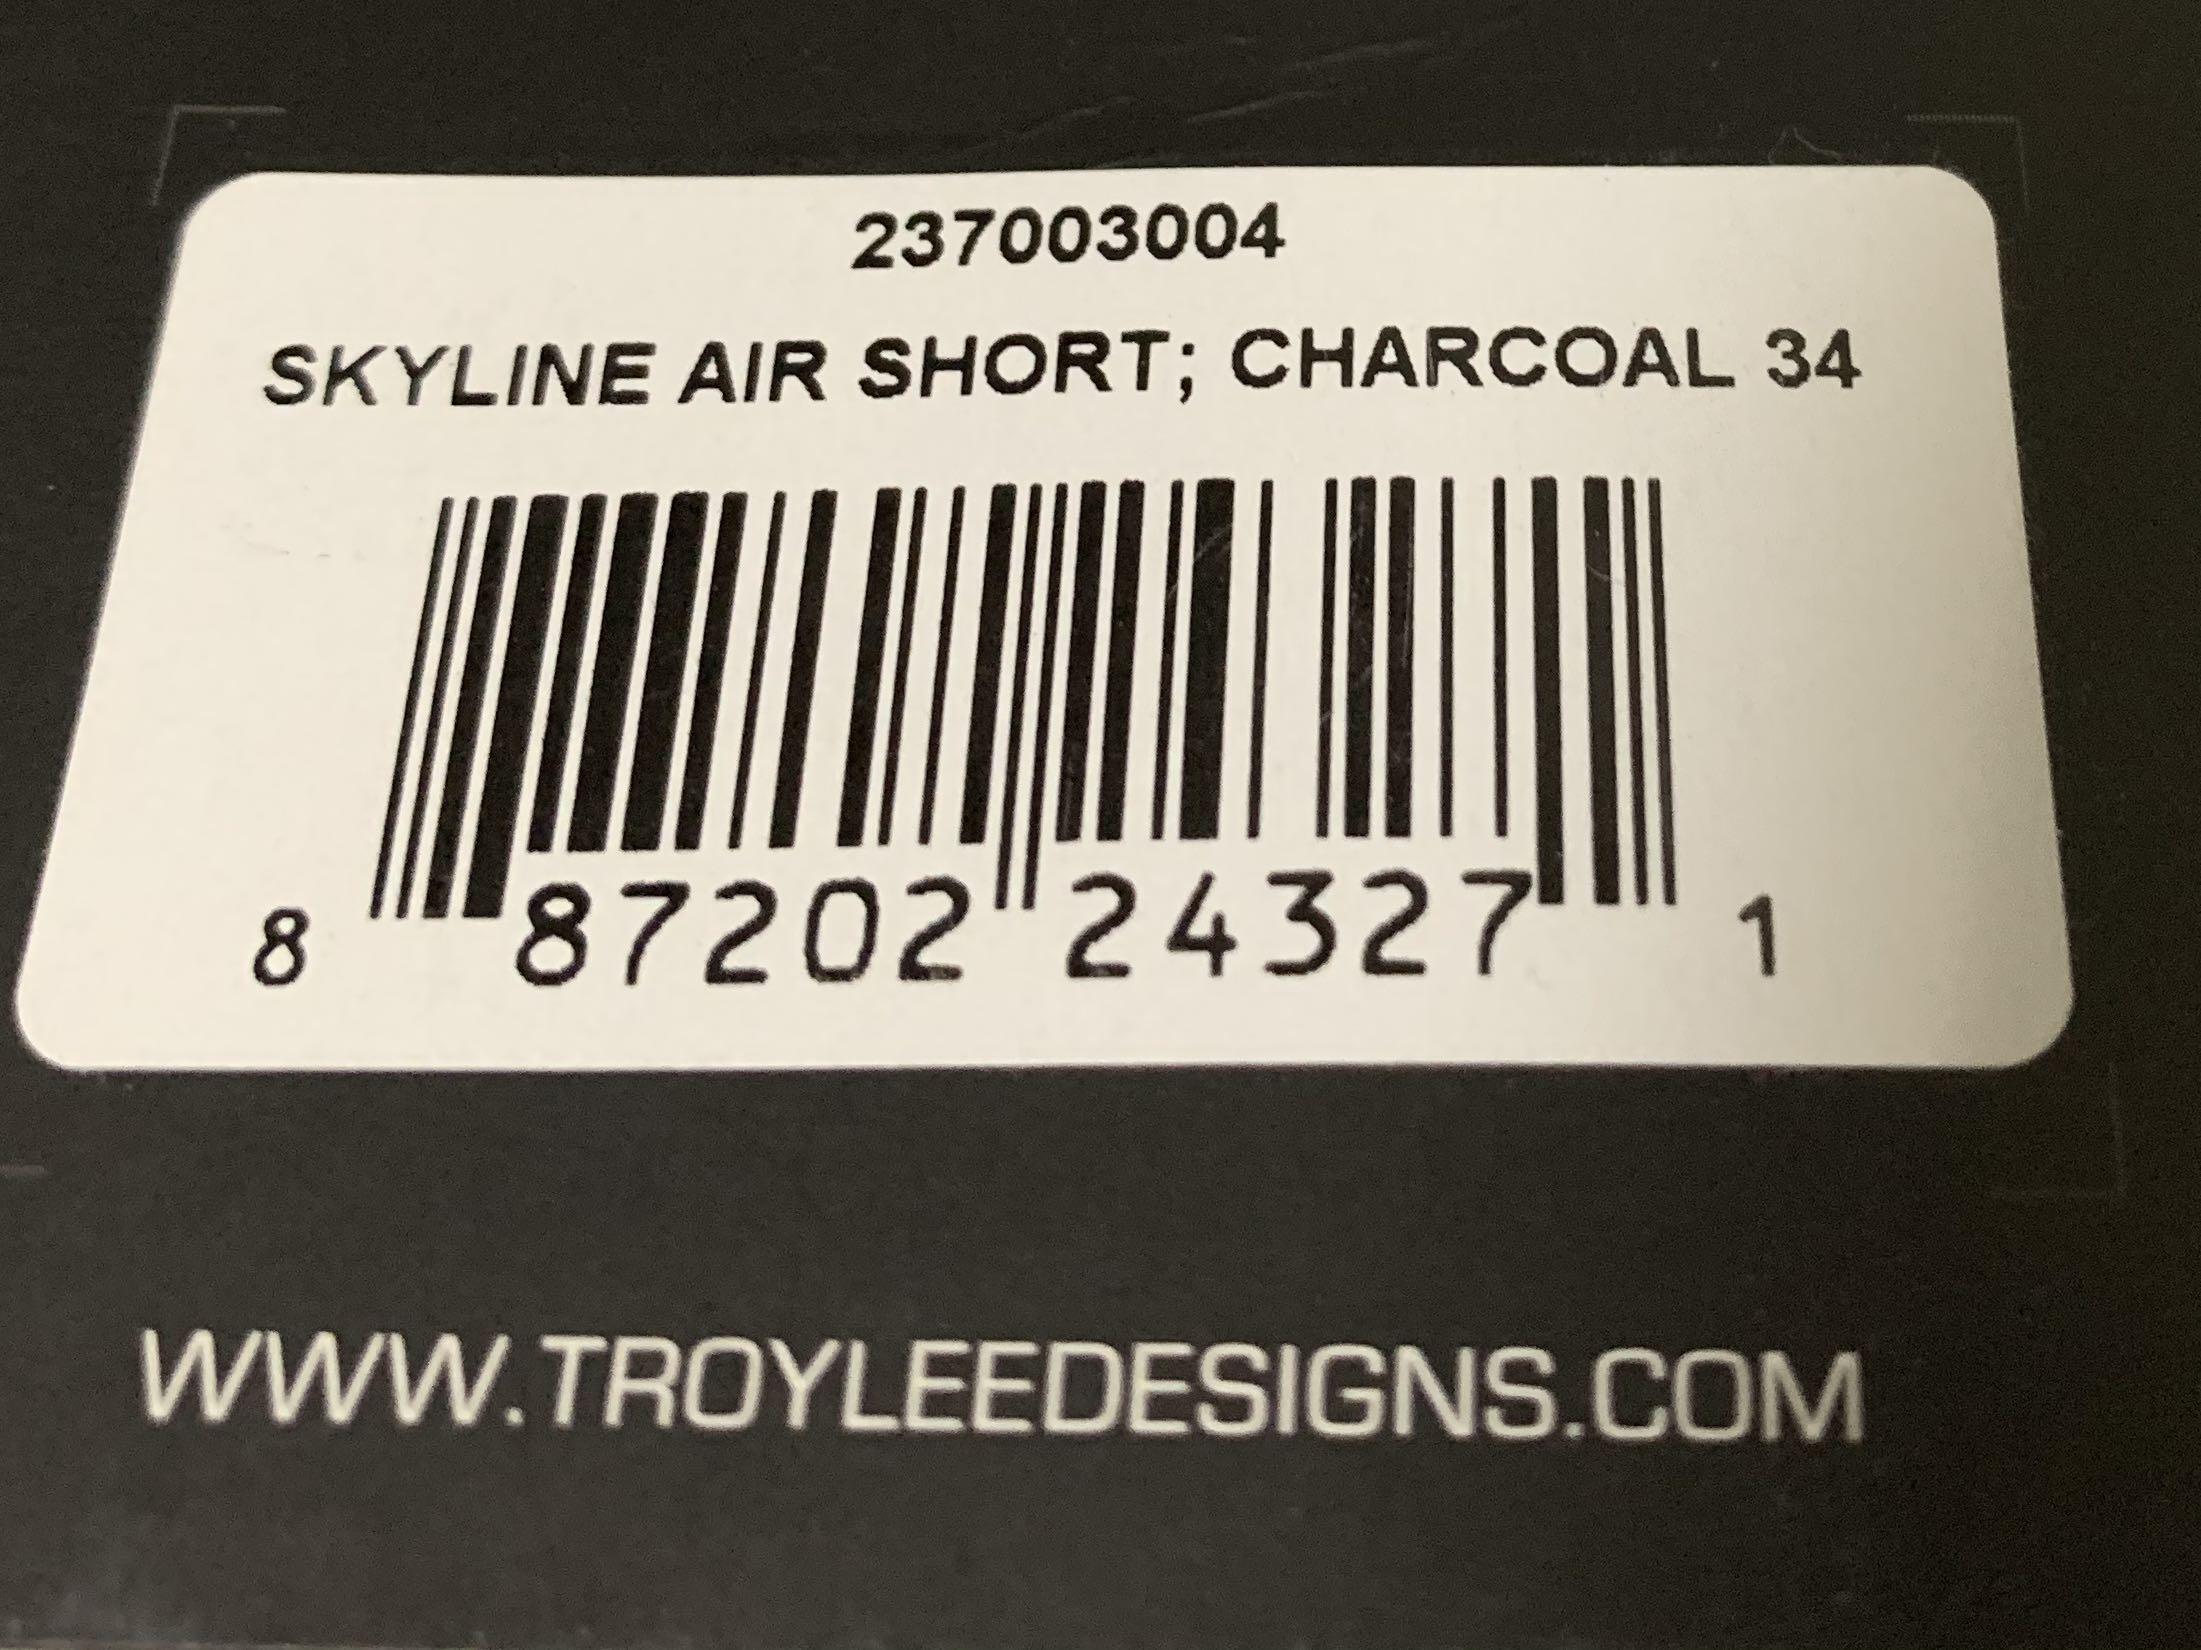 troy lee designs skyline air shorts